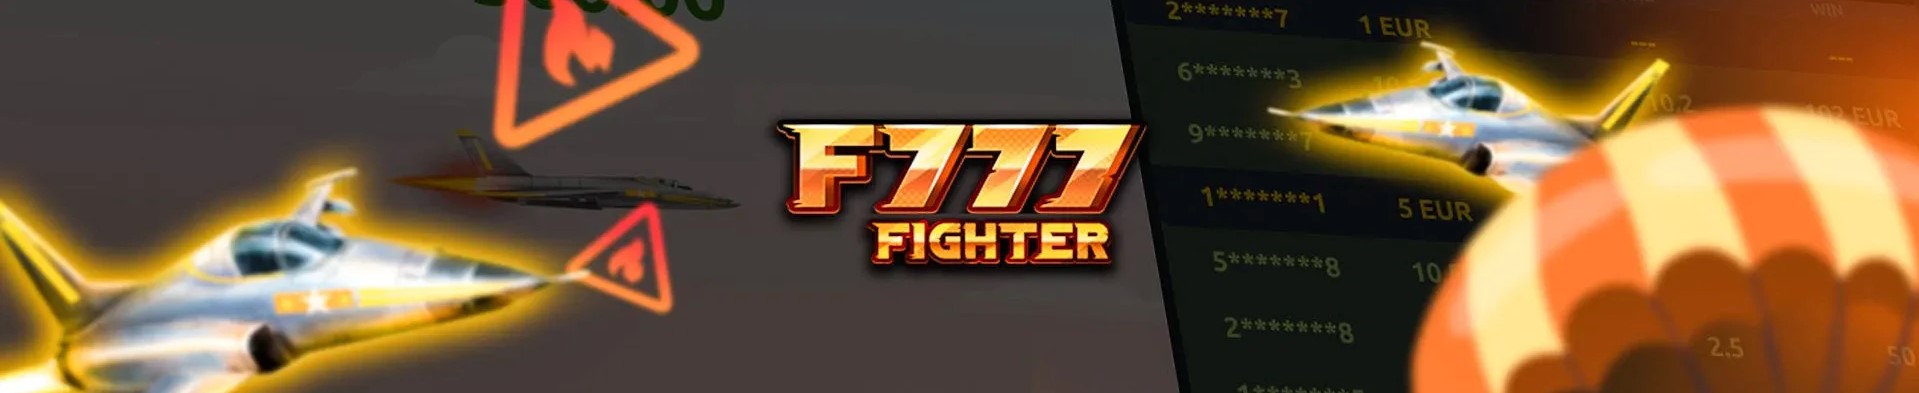 F777 fighter spill.